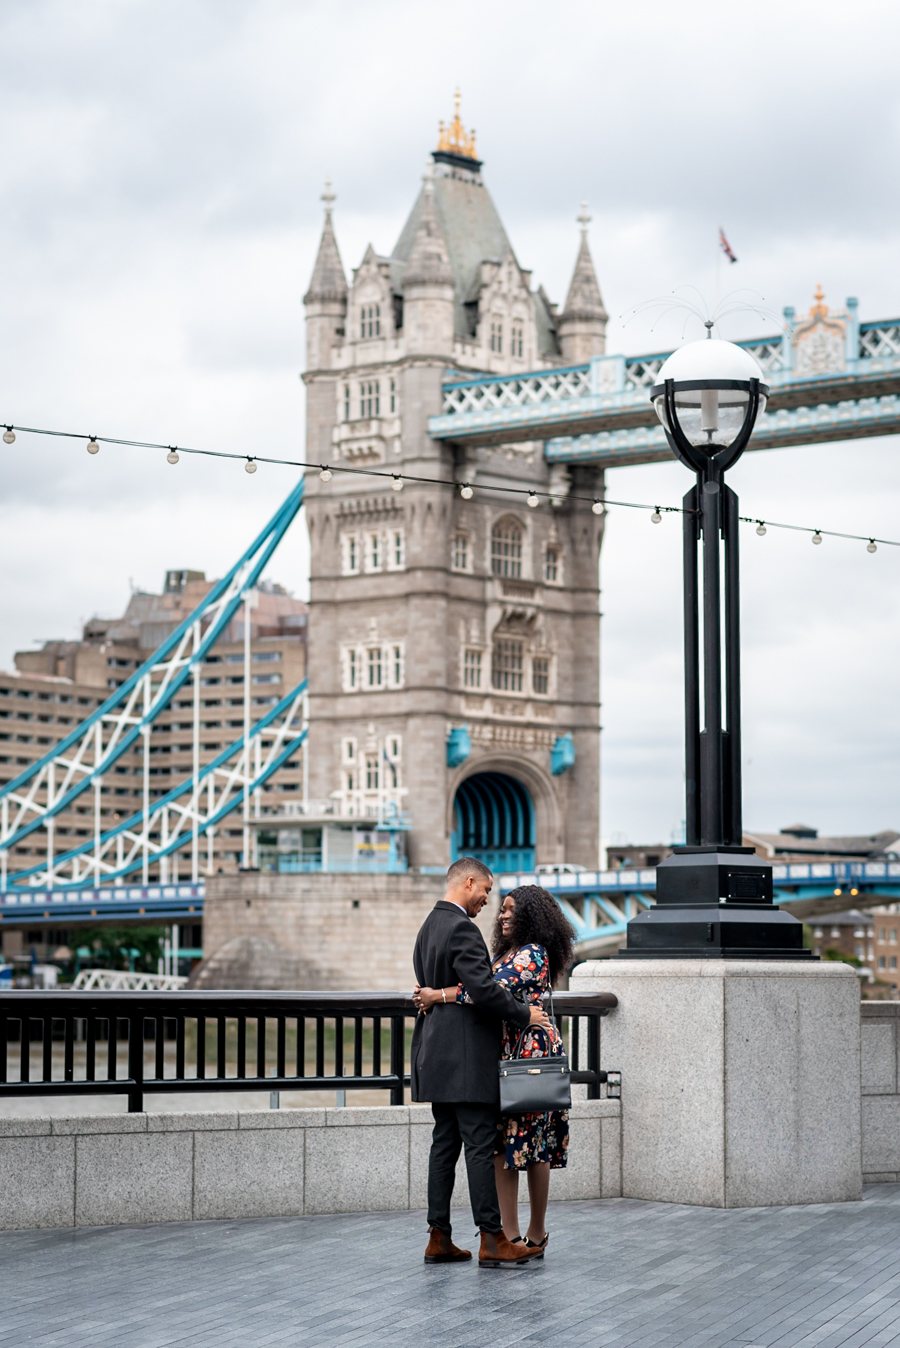 Akinwale & Oluwaseun’s dream proposal in London, captured on camera by Matt Badenoch Photography